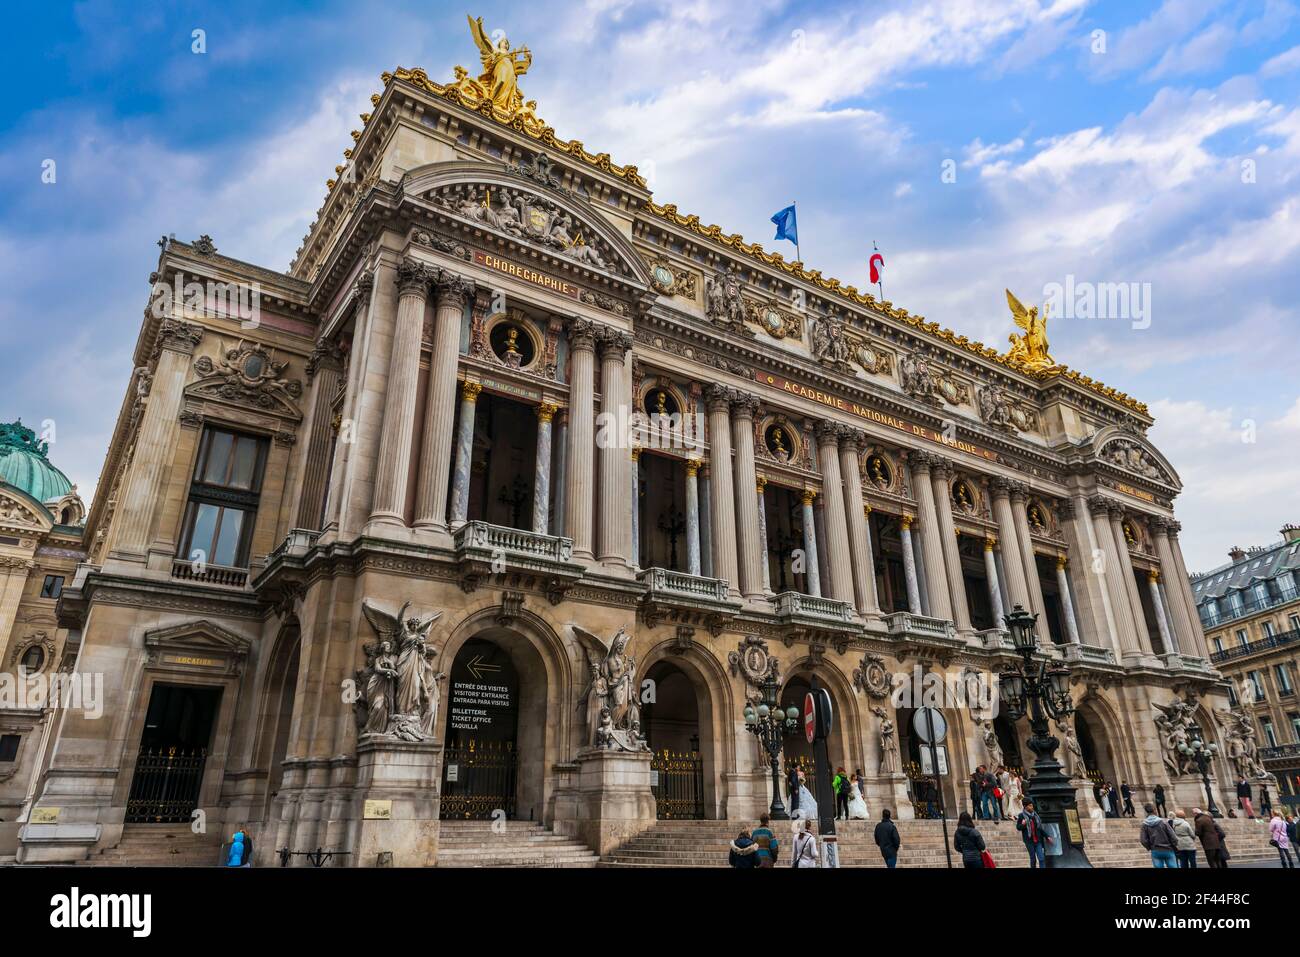 Monumentale Opéra Garnier, Opera Square in Paris, France Stock Photo